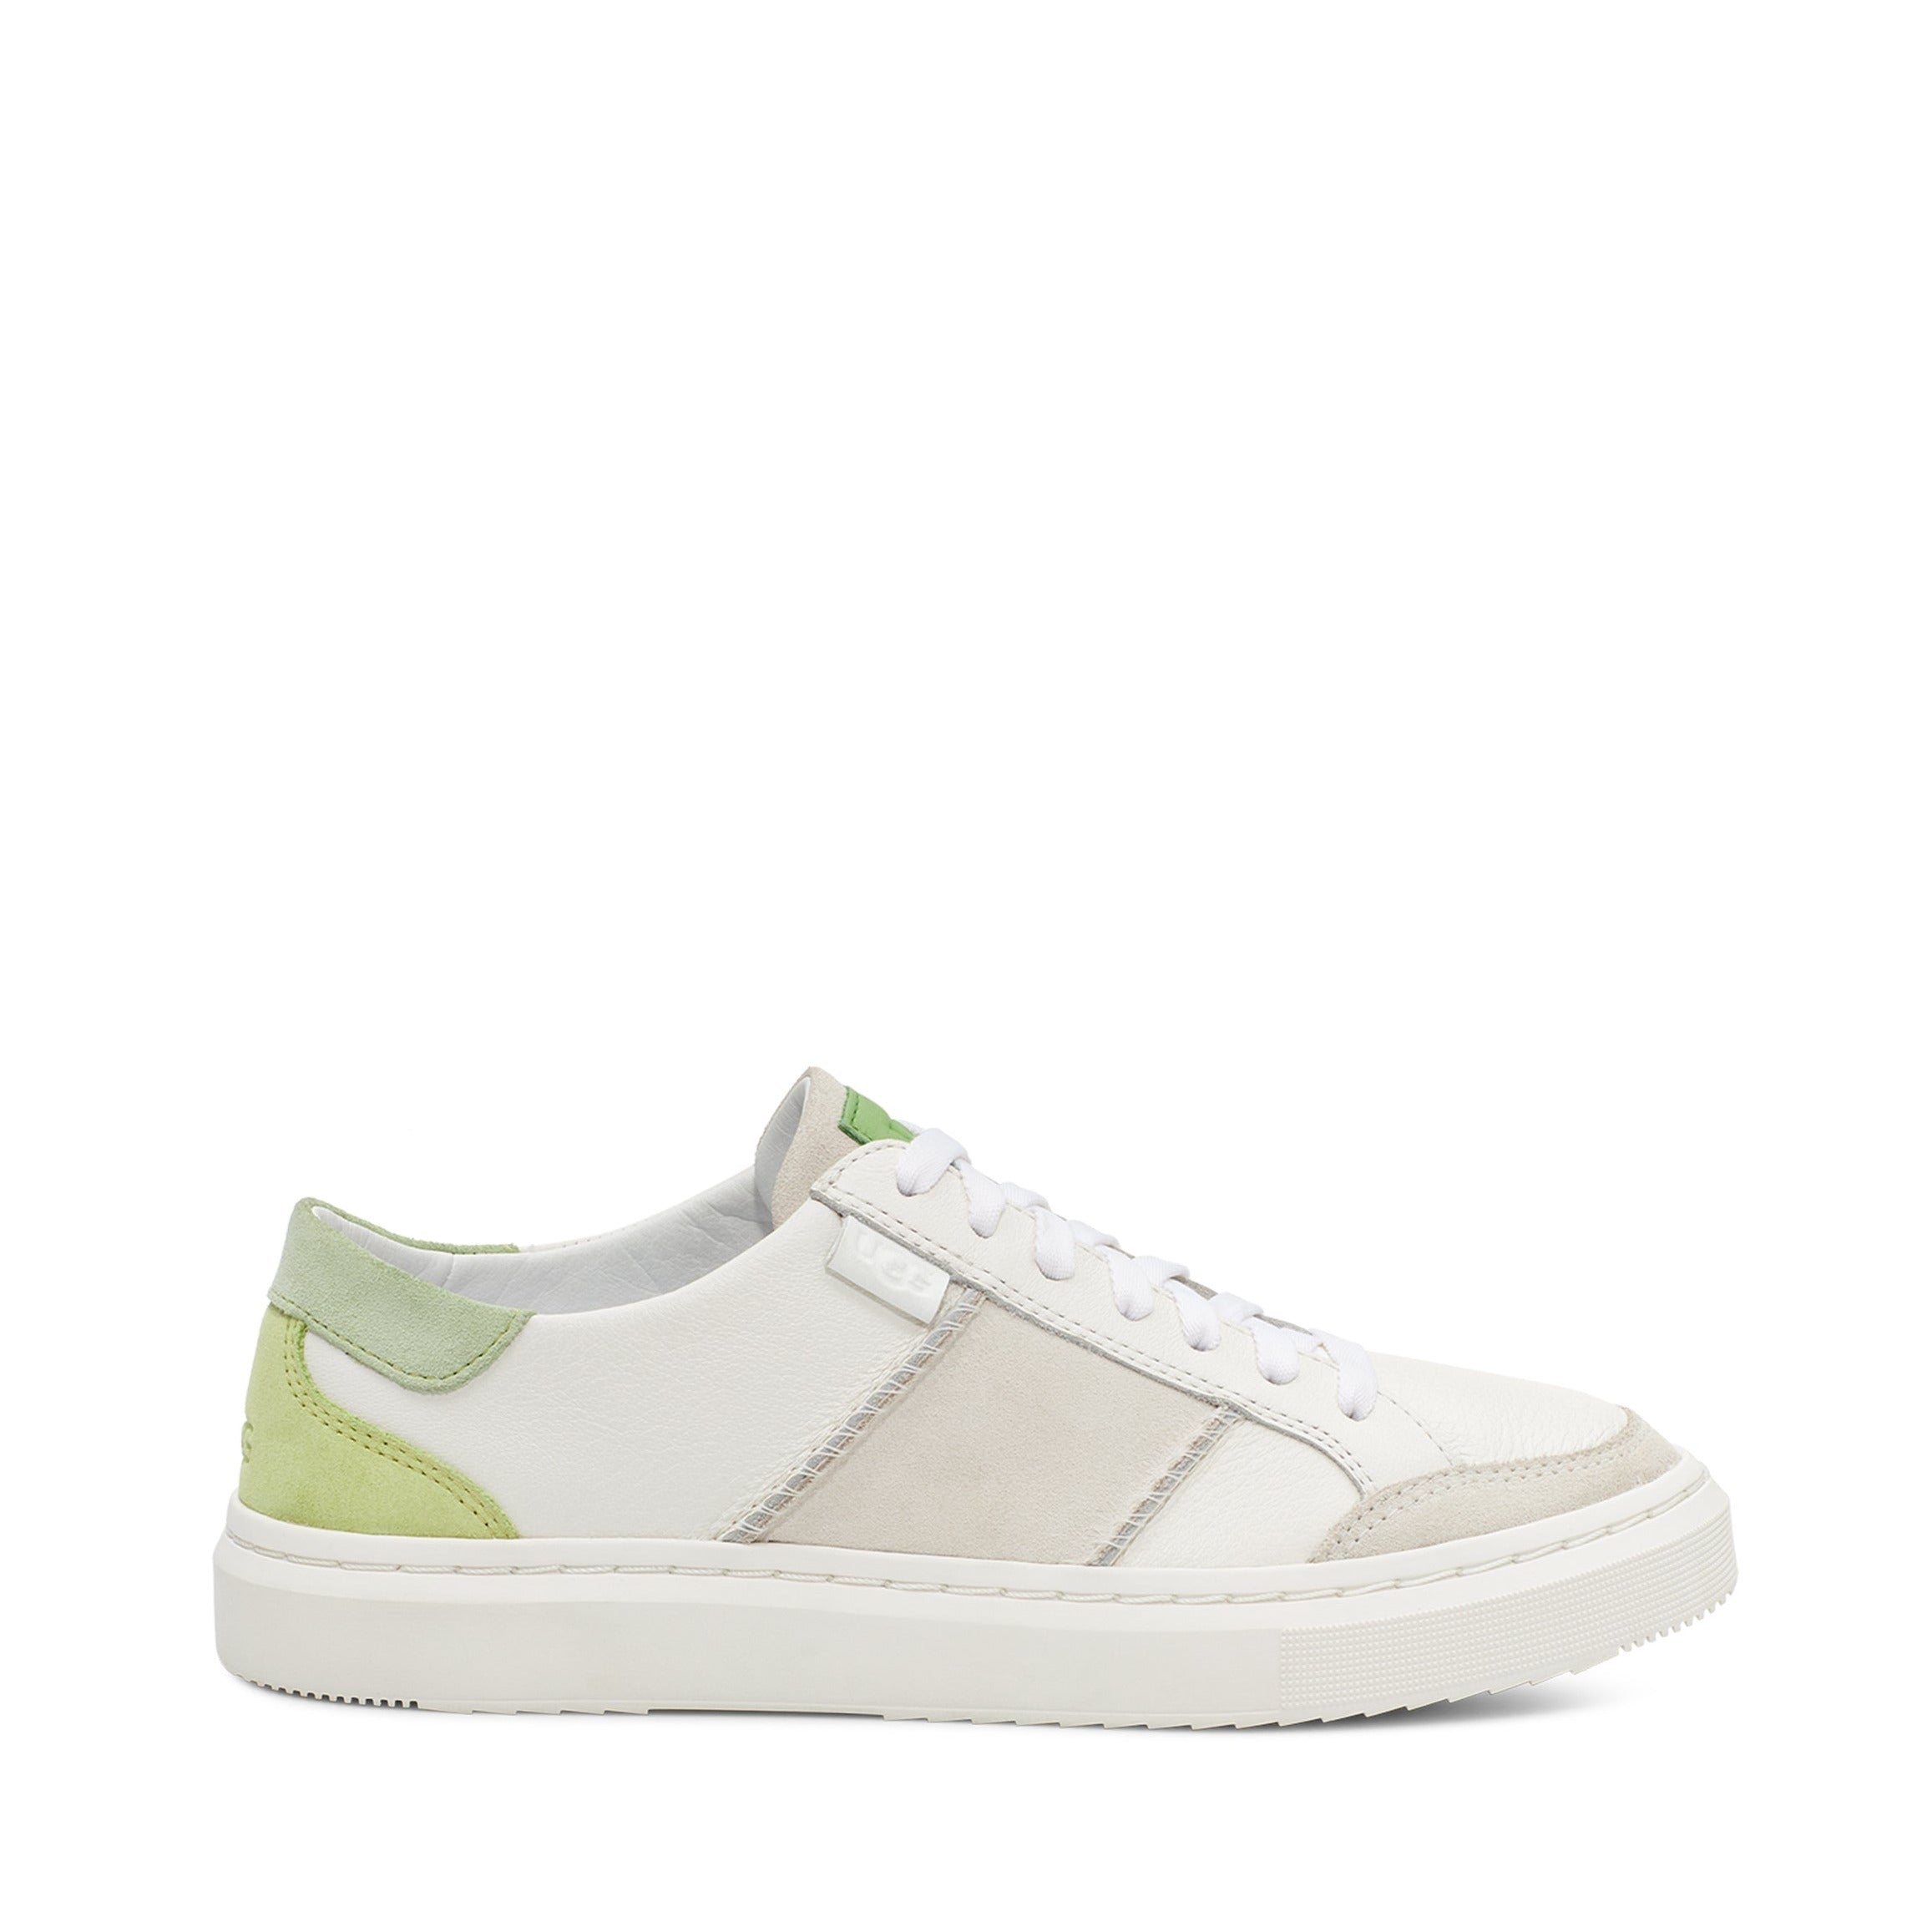 Sample UGG Alameda Lace Sneaker Bright White/Melon Green  